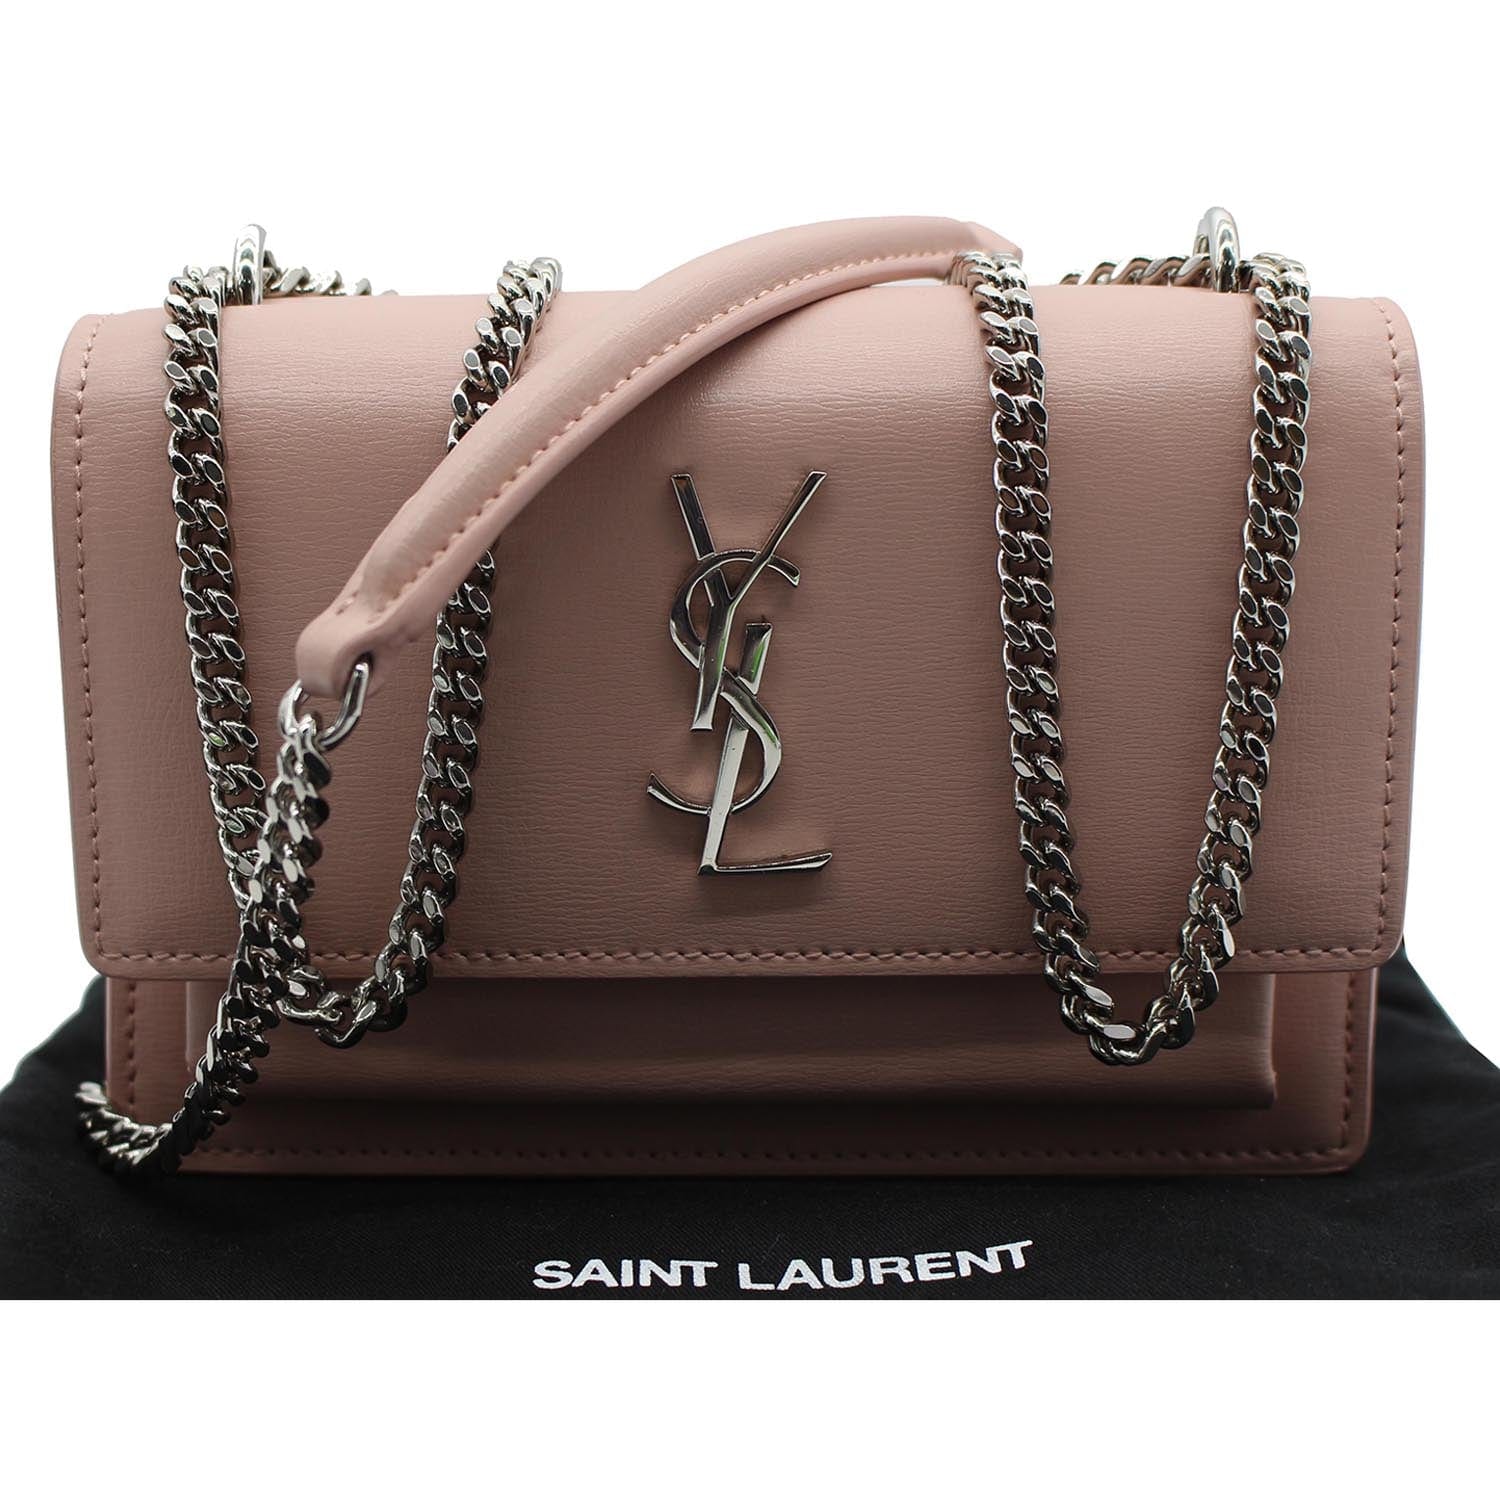 Saint Laurent Sunset Leather Medium Shoulder Bag